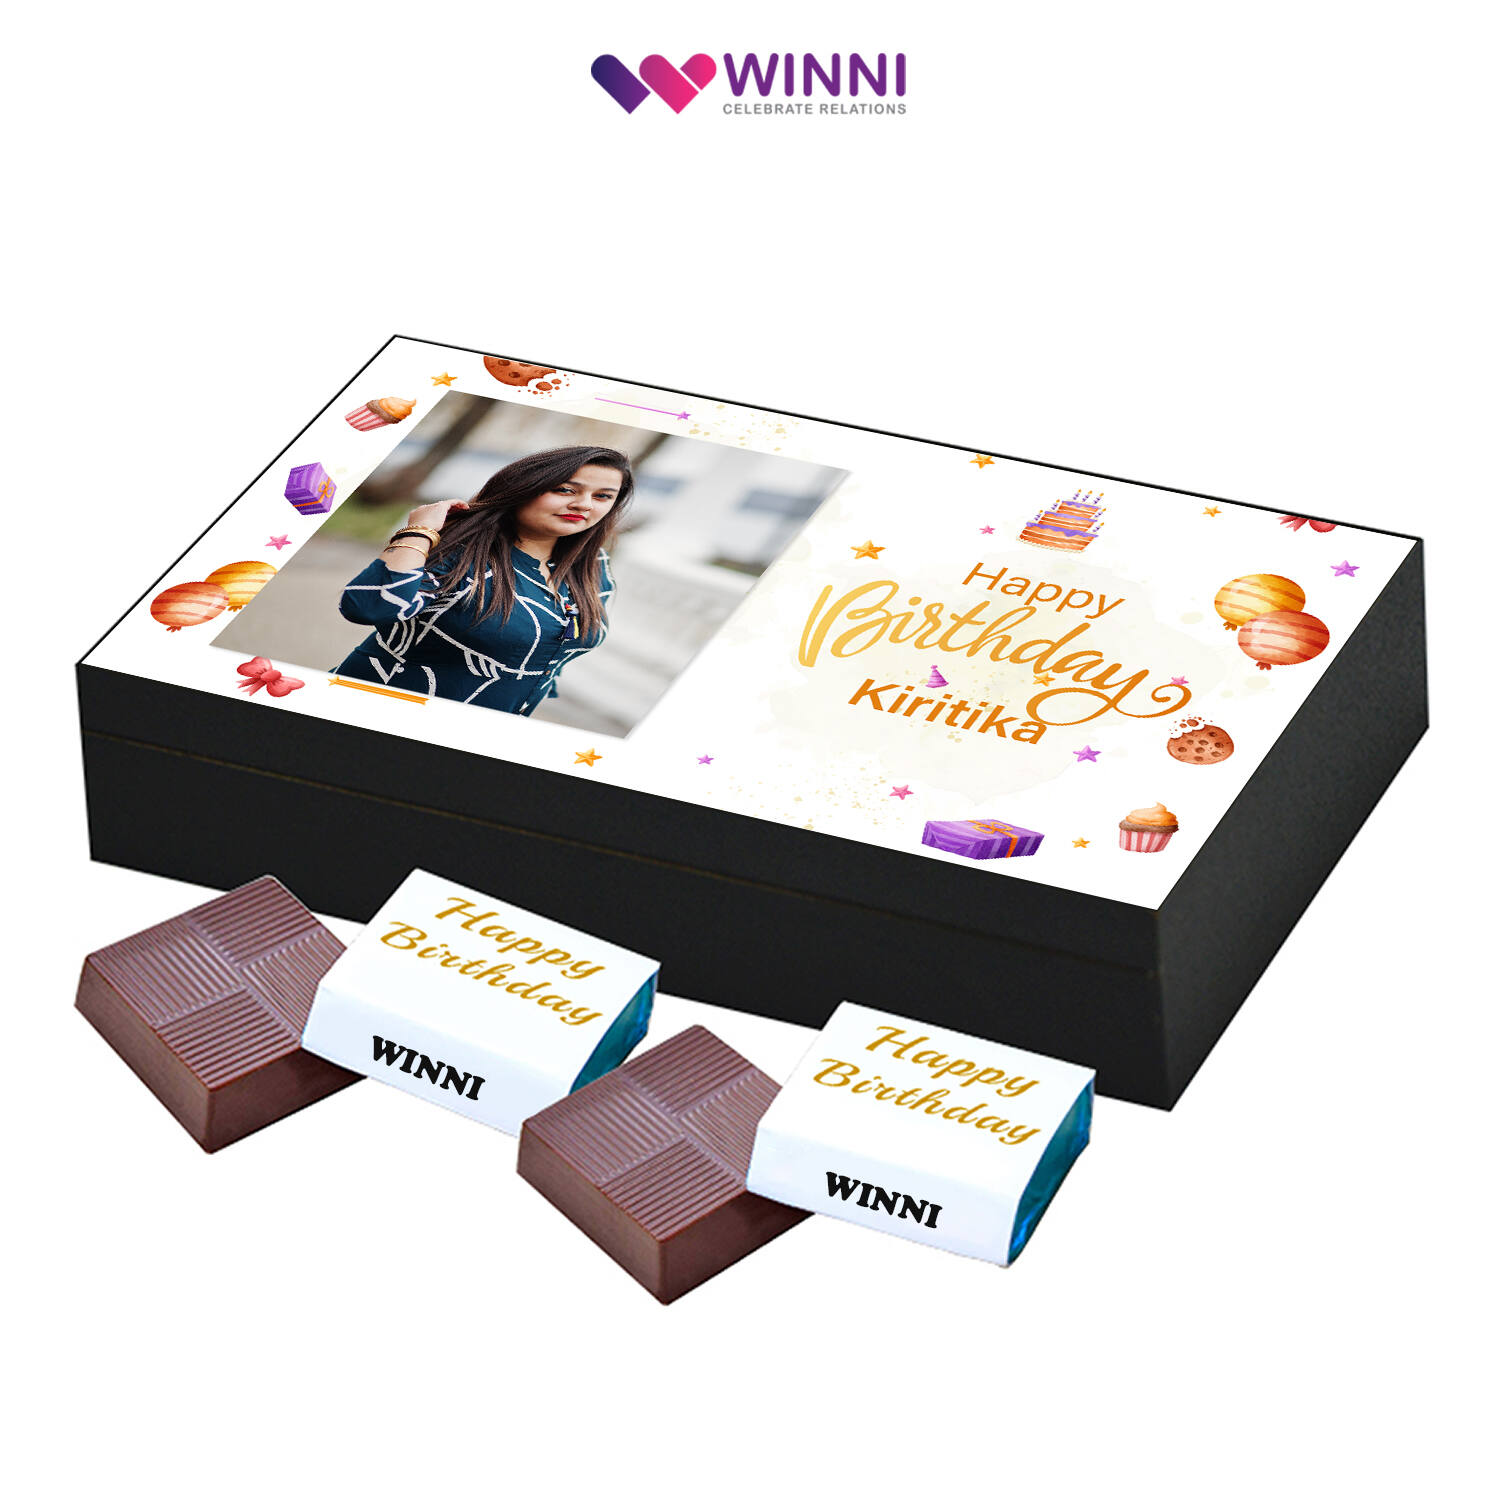 Simply Chocolate Happy Birthday Personalized Box | Simply Chocolate